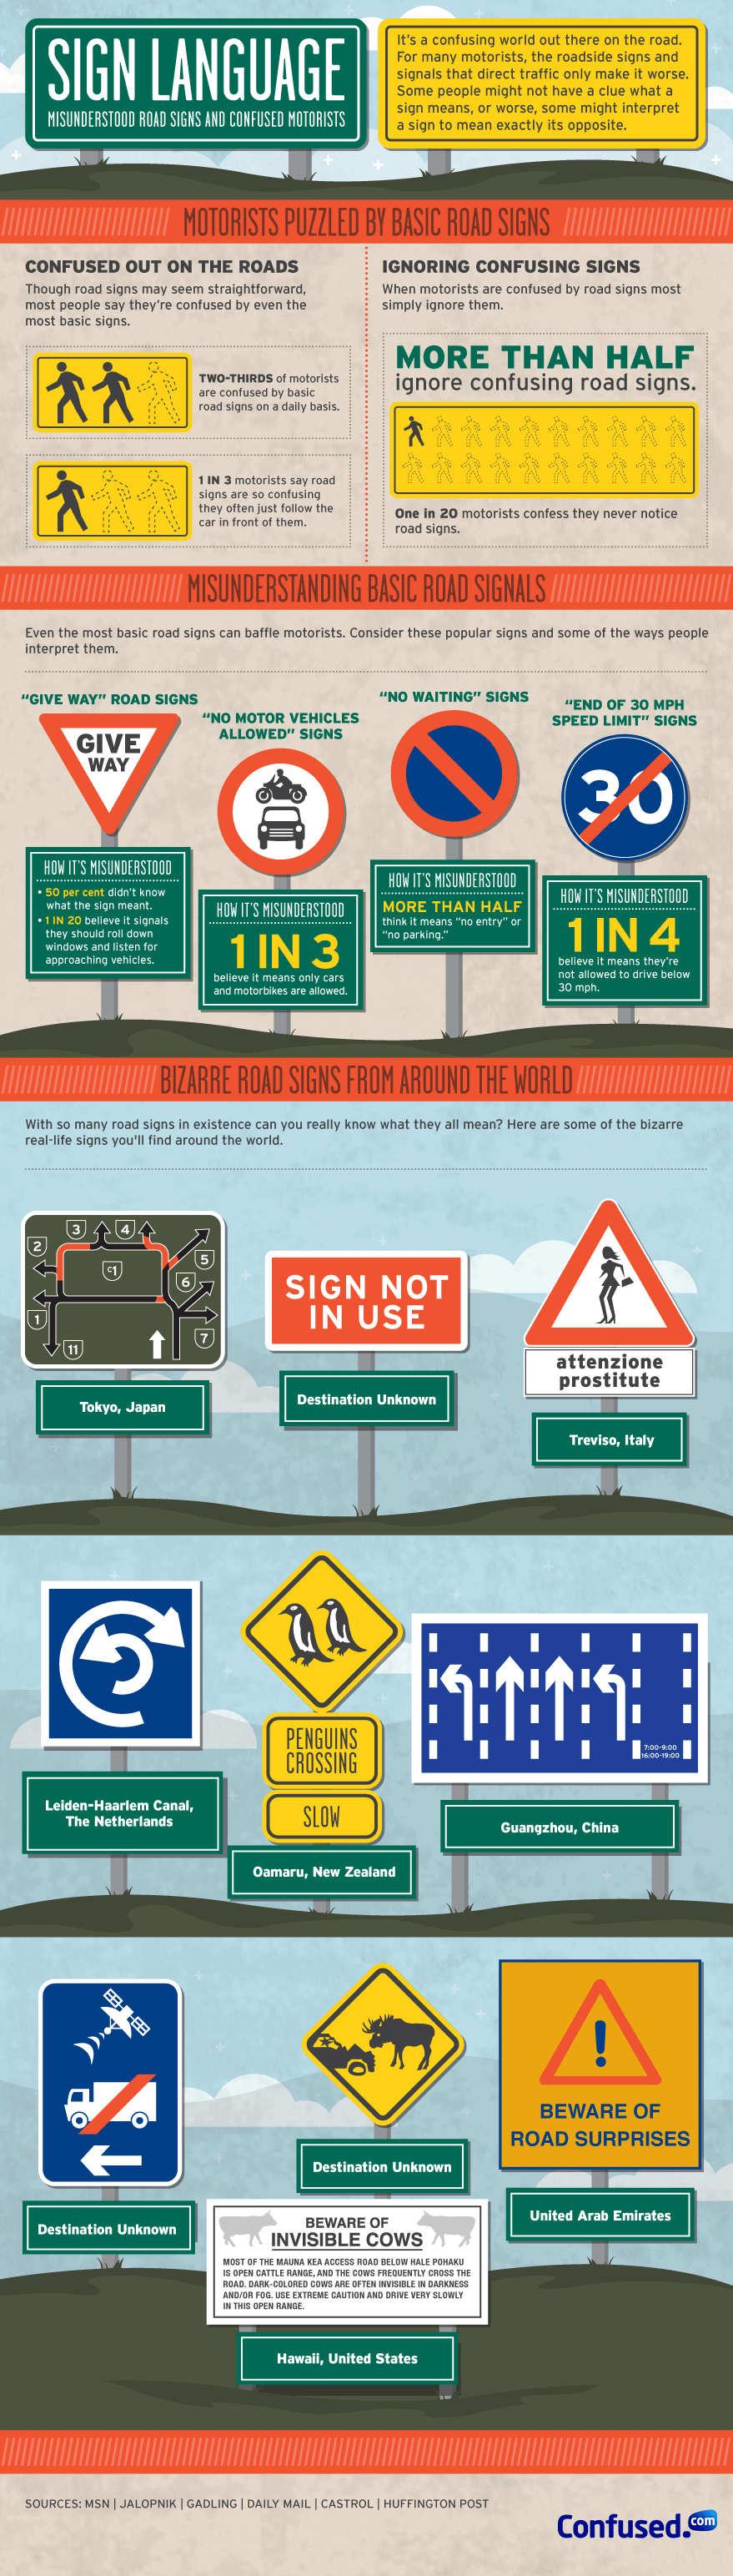 Misunderstood Road Signs and Confused Motorists